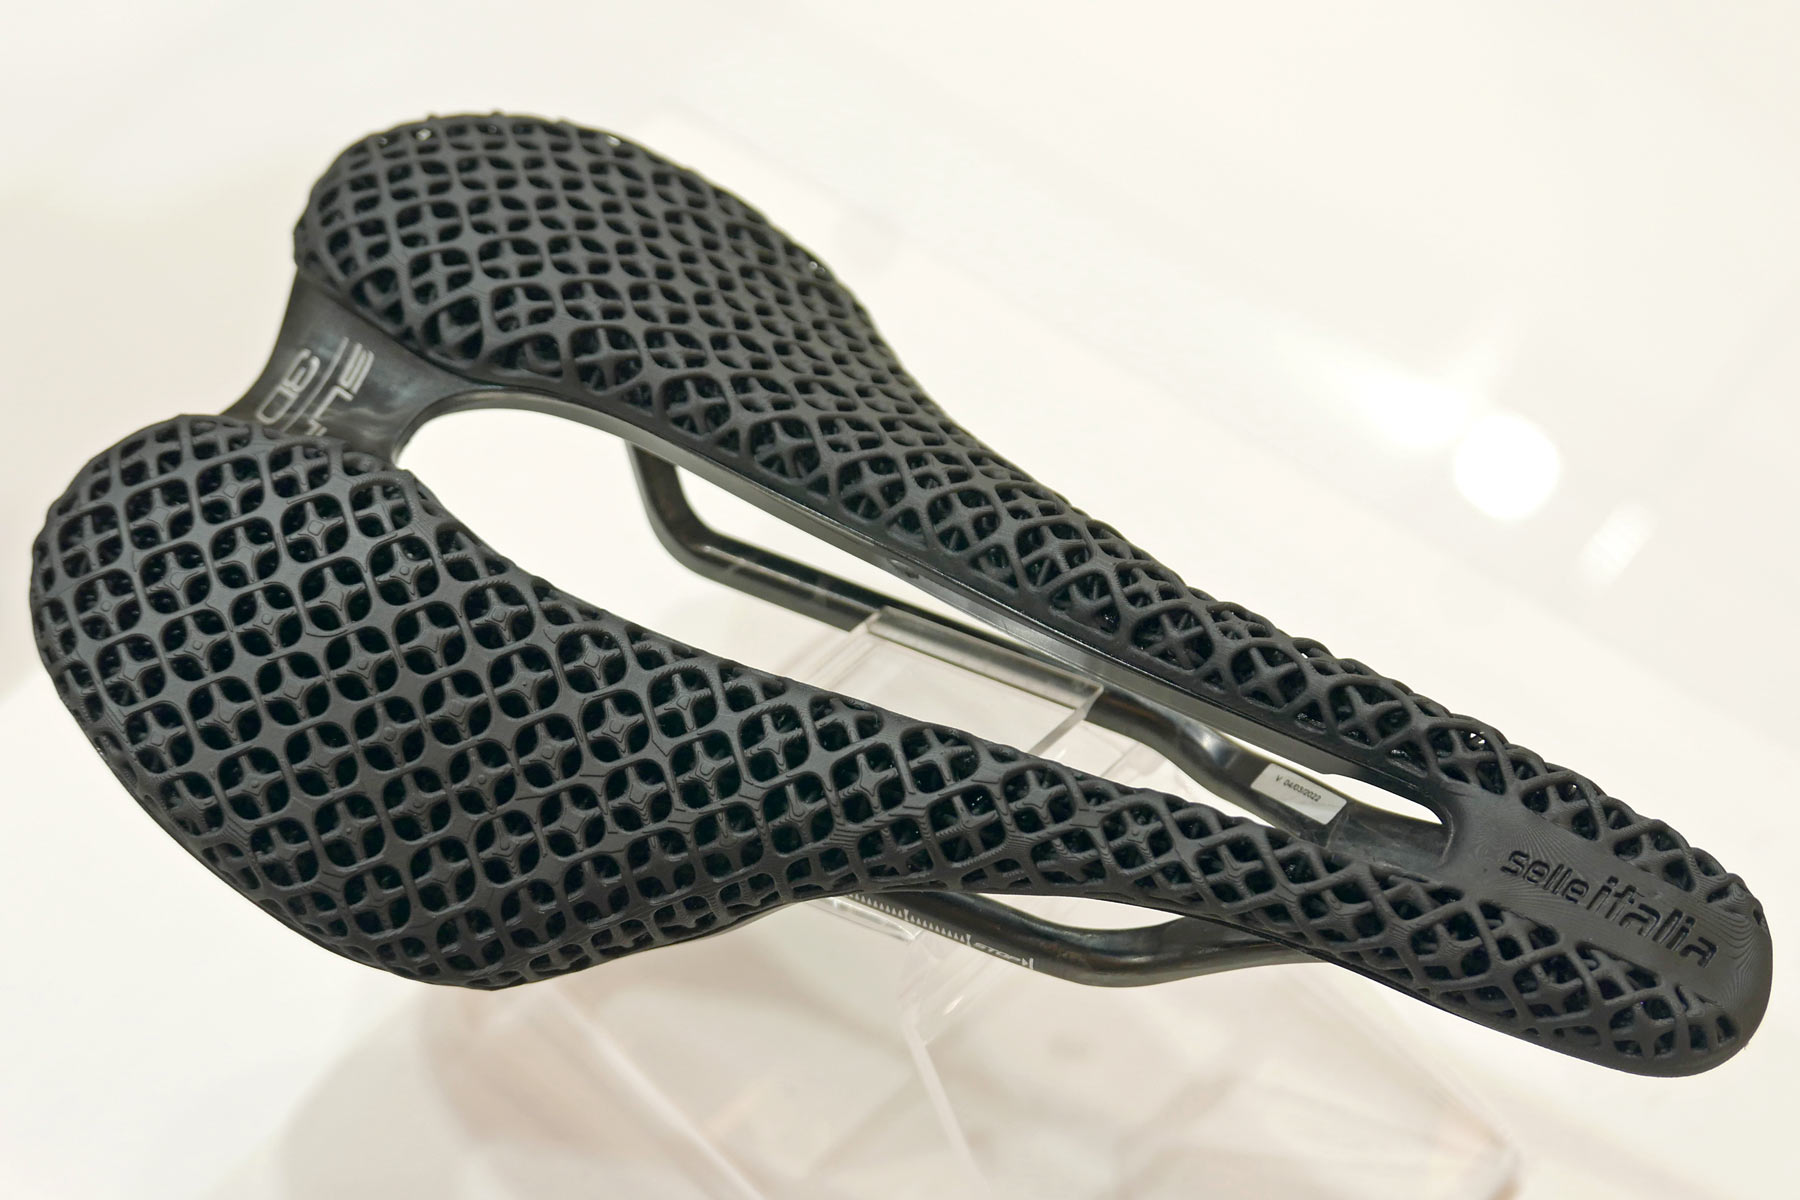 Selle Italia SLR Boost 3D-printed saddle